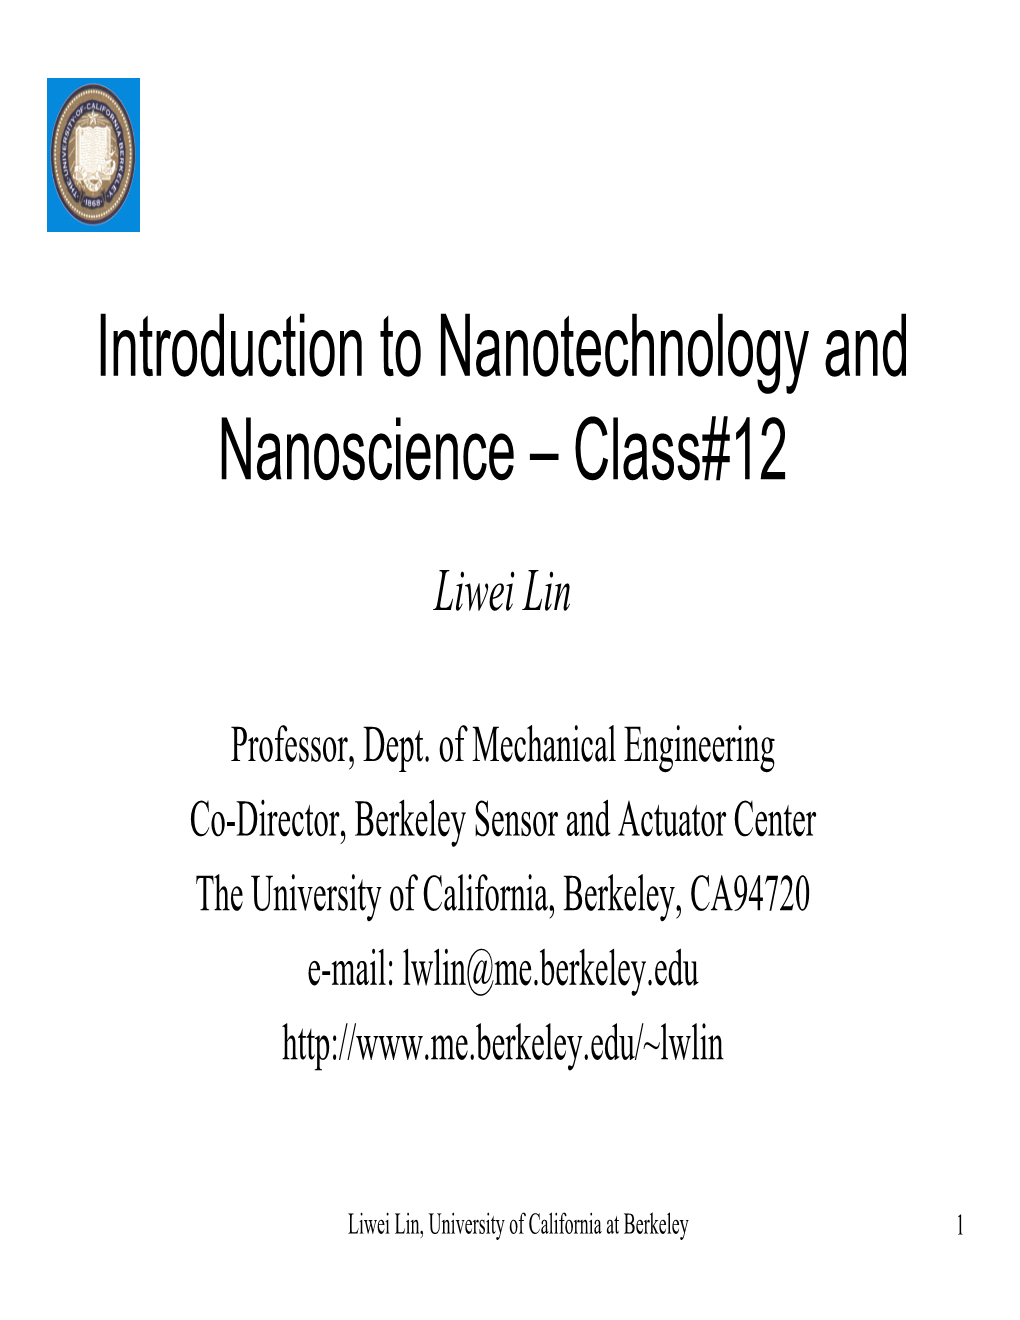 Introduction to Nanotechnology and Nanoscience – Class#12